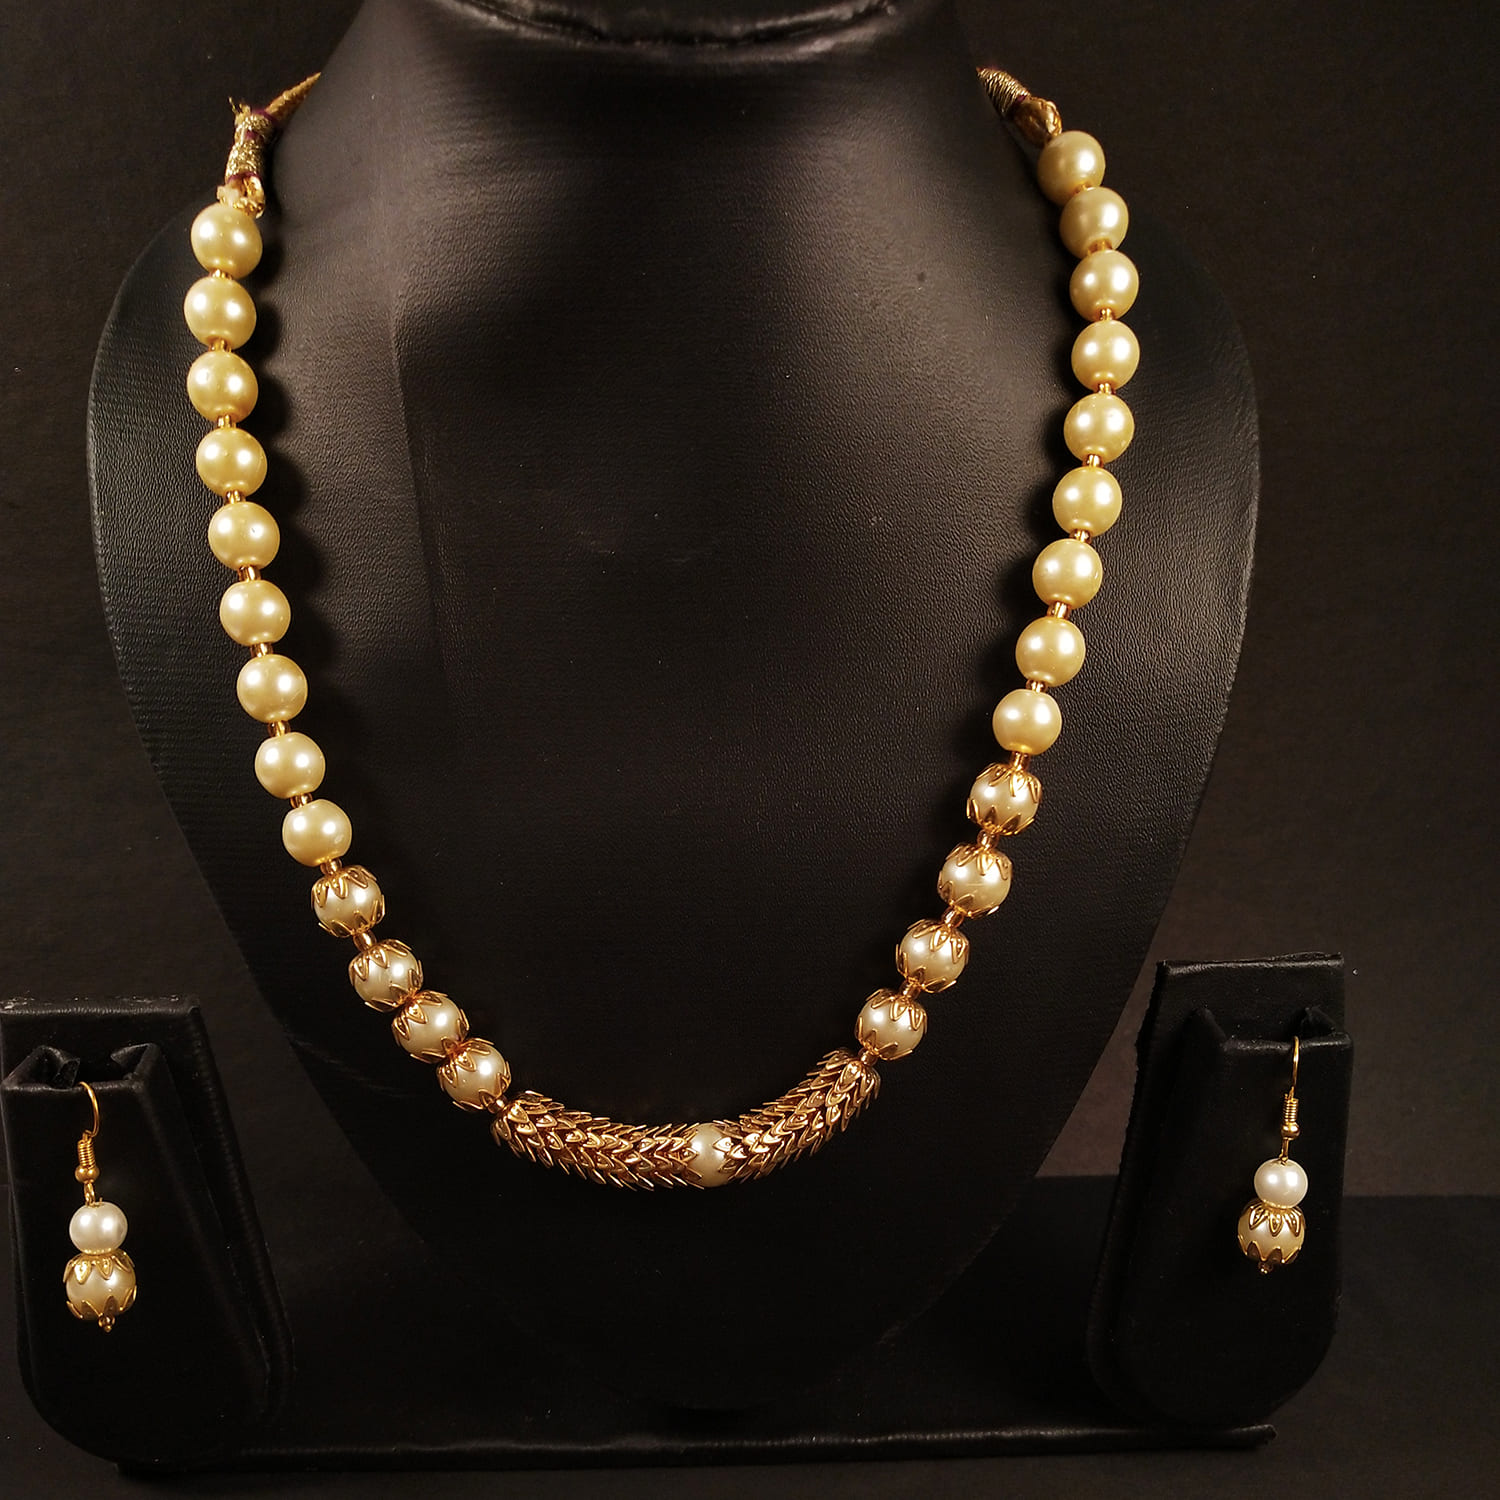 Buy Children's Girls Kids Faux Pearl Necklace Bracelet Earrings Jewelry  Wedding Party Set UK Online in India - Etsy